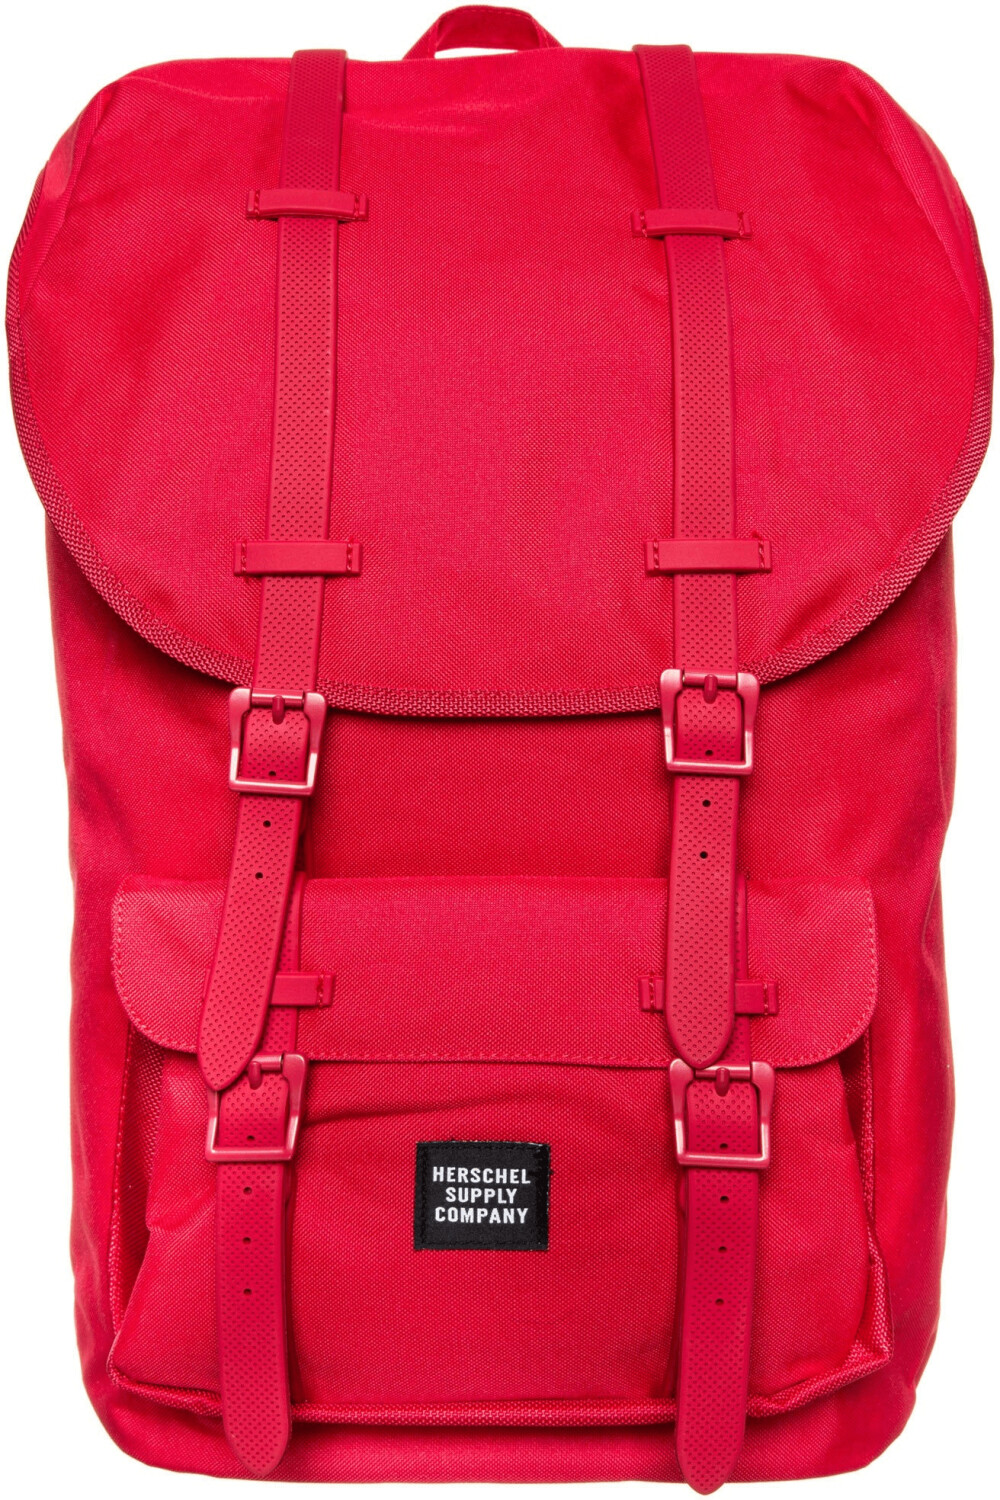 Herschel Little America Backpack red/red ballistic/red rubber